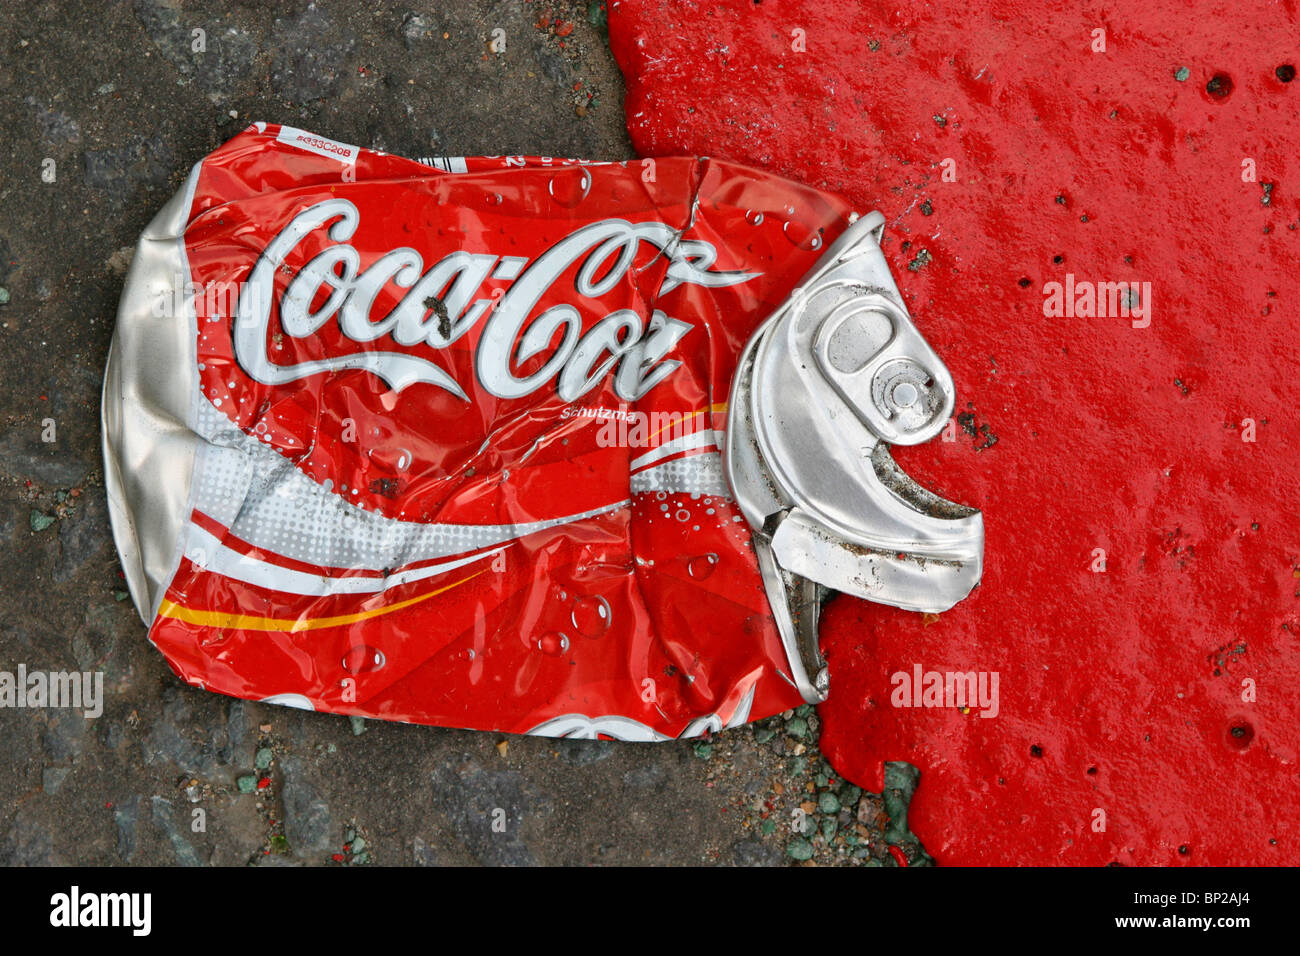 Coca cola uk litter fotografías e imágenes de alta resolución - Alamy